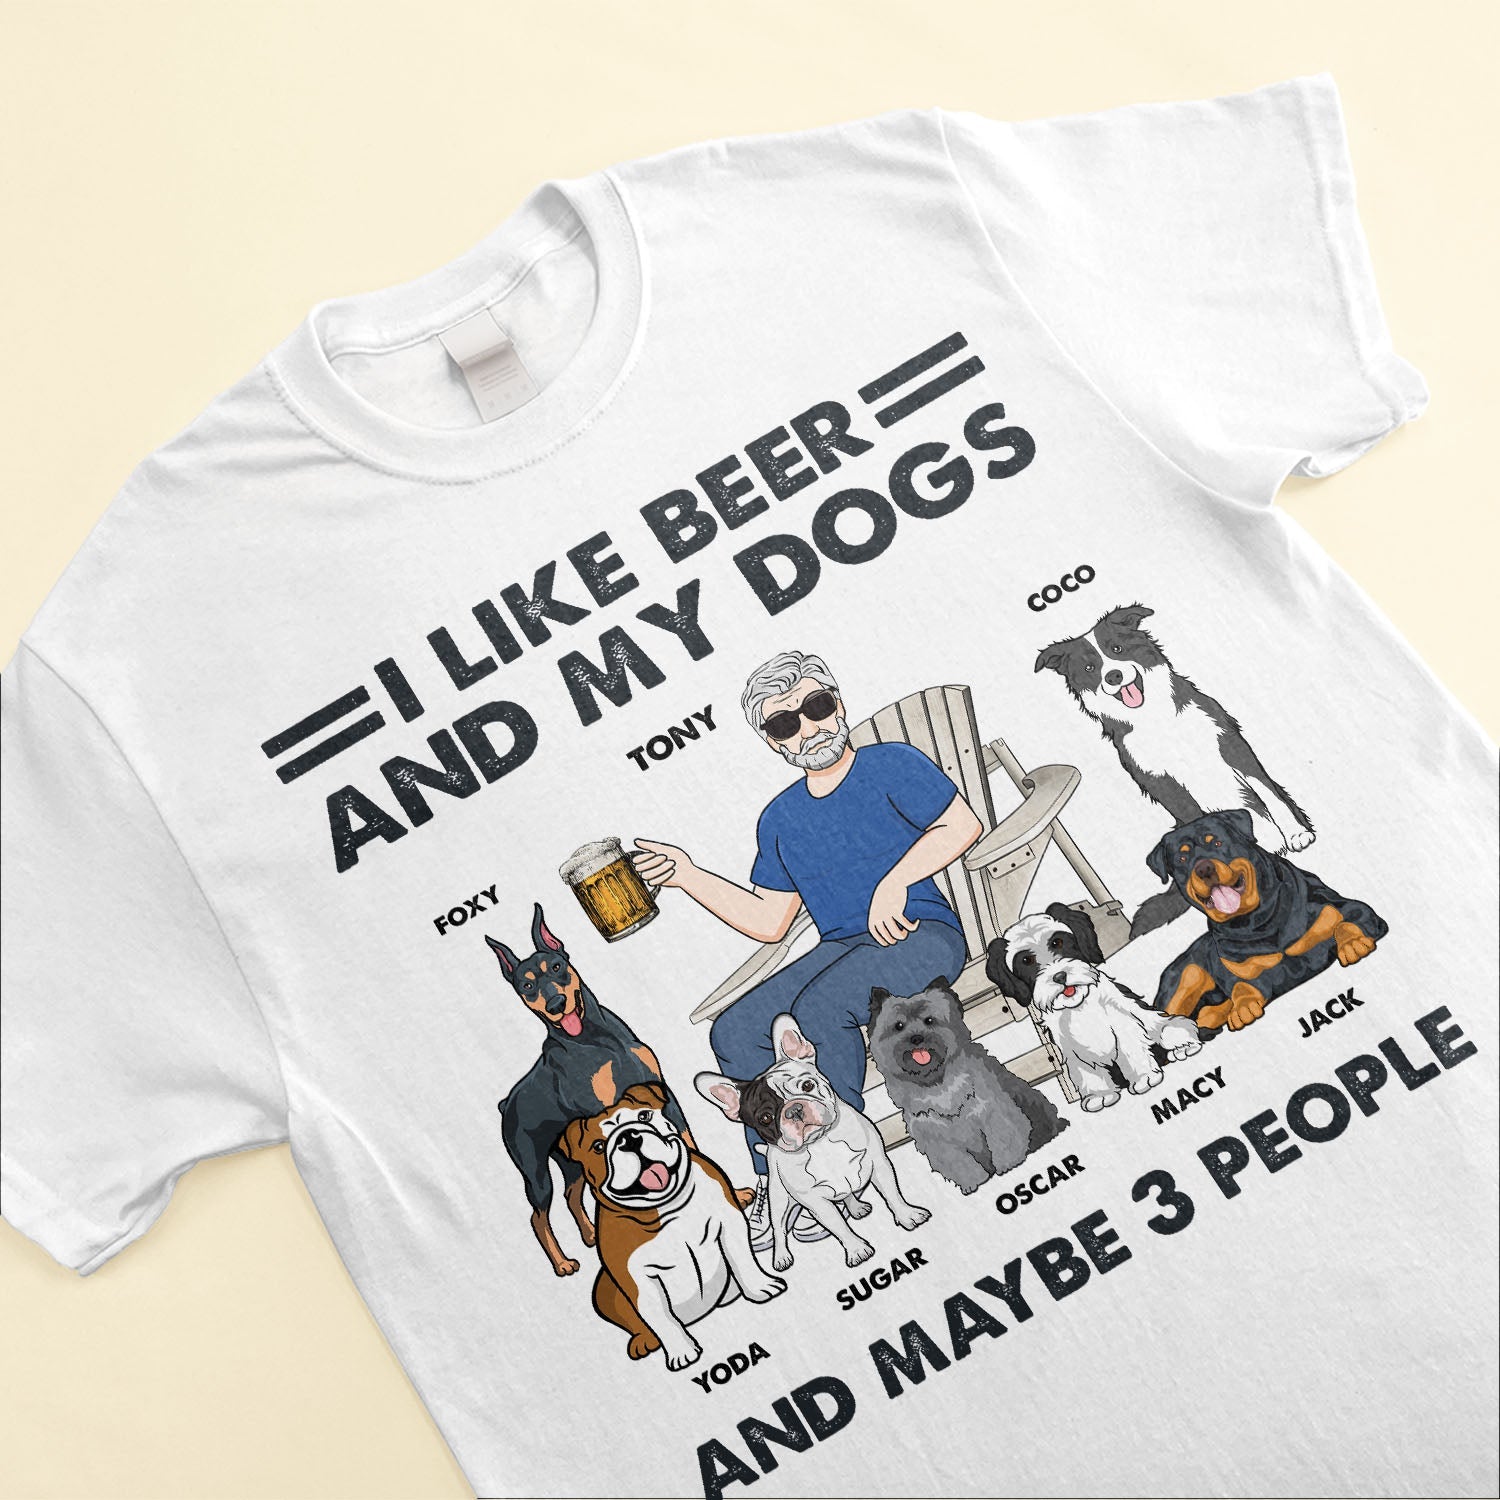 Custom Dog Shirts Small Dogs